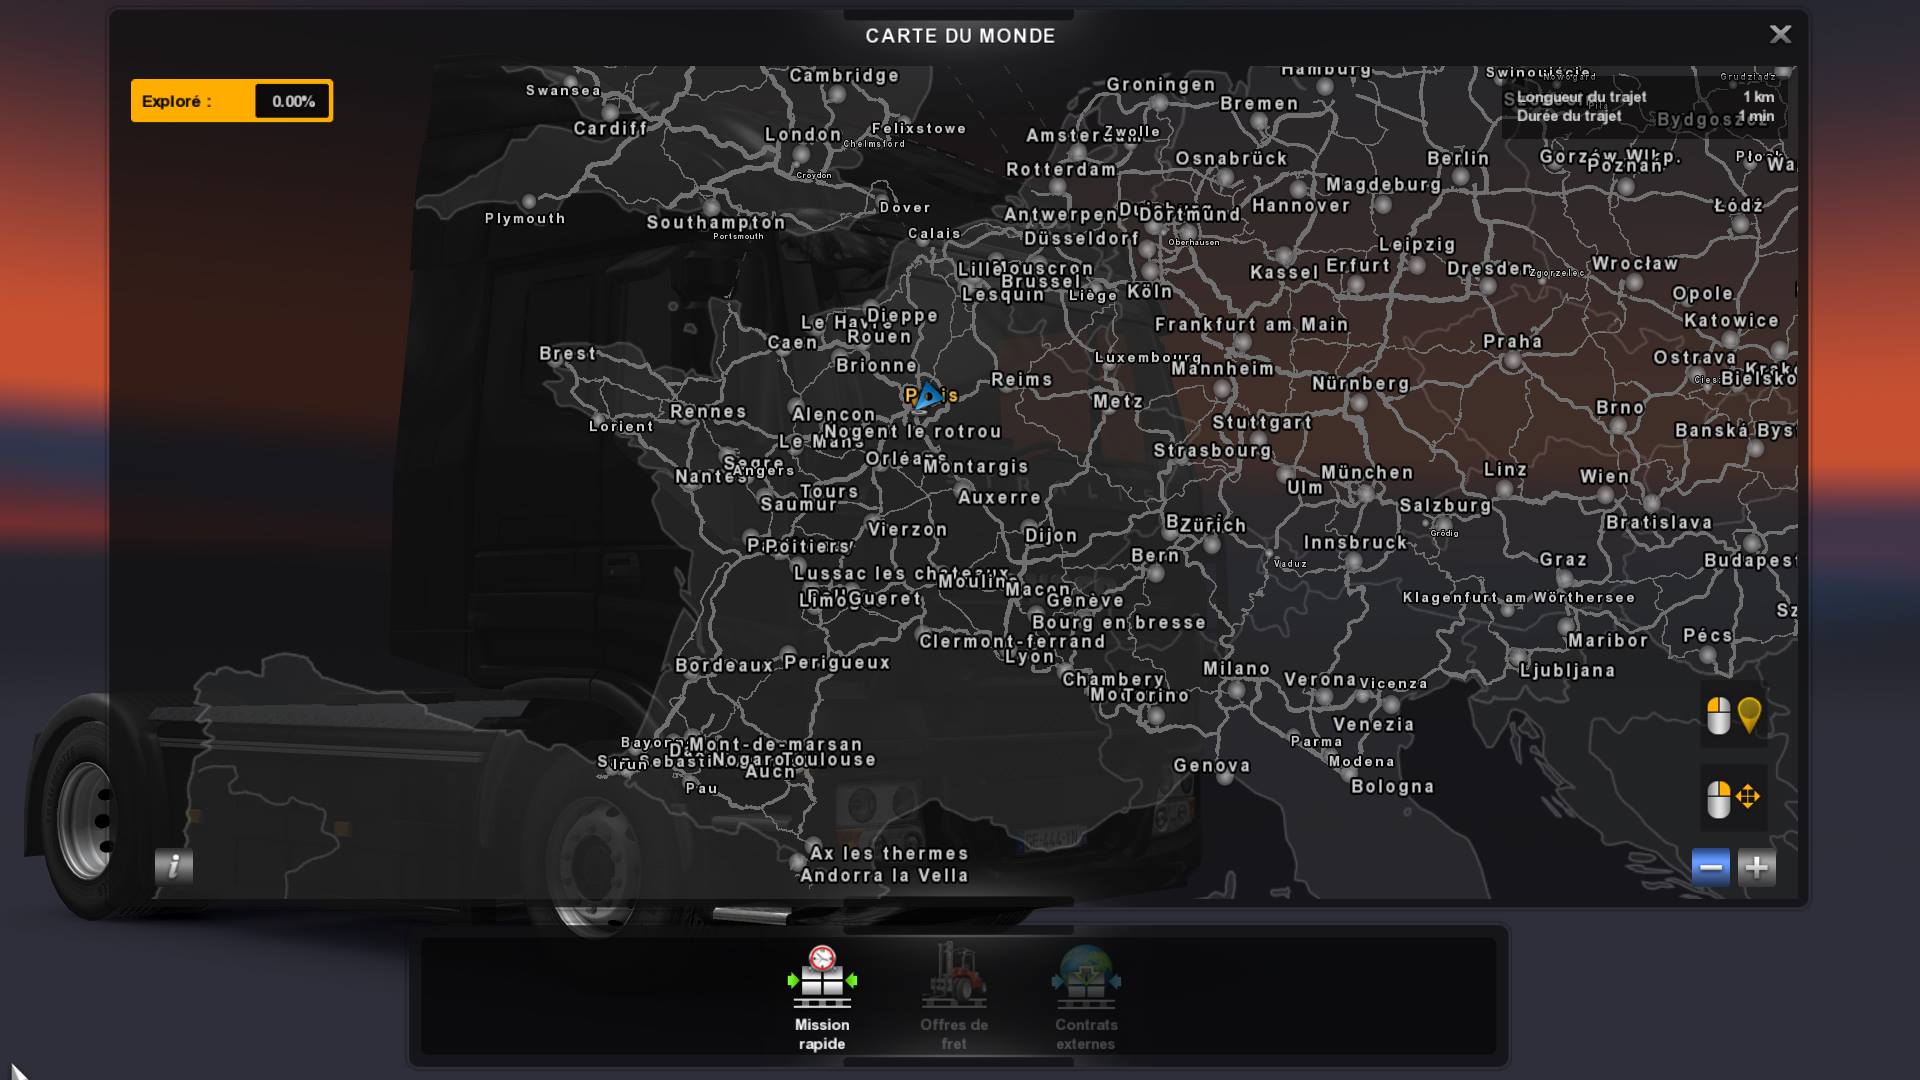 Euro Truck Simulator 2 Full Map V2 Map Collectif France v1.24 COMPATIBLE 1.24 | ETS2 mods | Euro truck simulator 2 mods